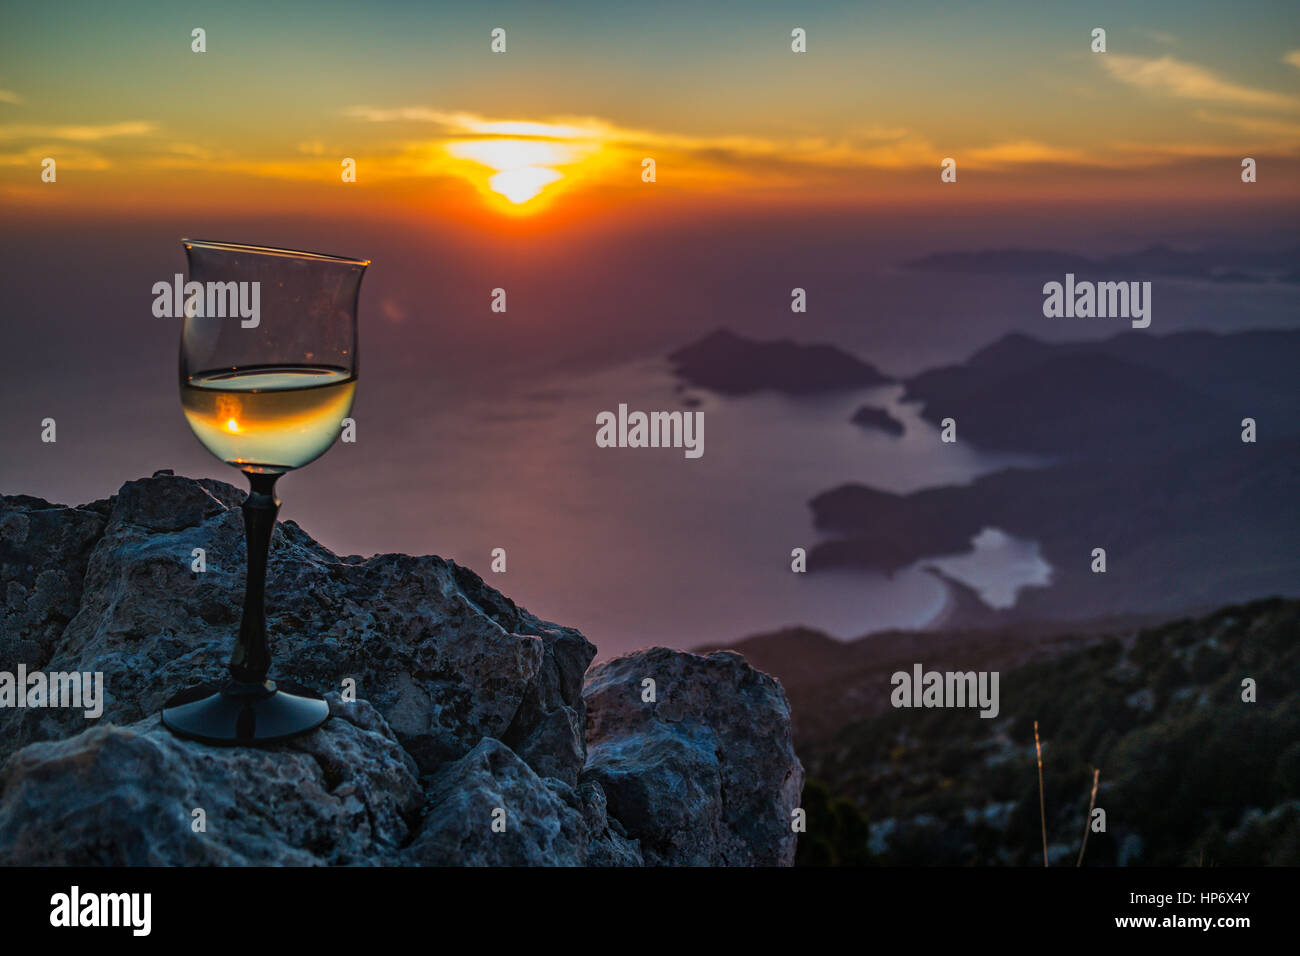 Perfetto tramonto di cremisi wineglass e la laguna blu di oludeniz turchia - oludeniz manzarasi pistola sarap batimi kadehi Foto Stock